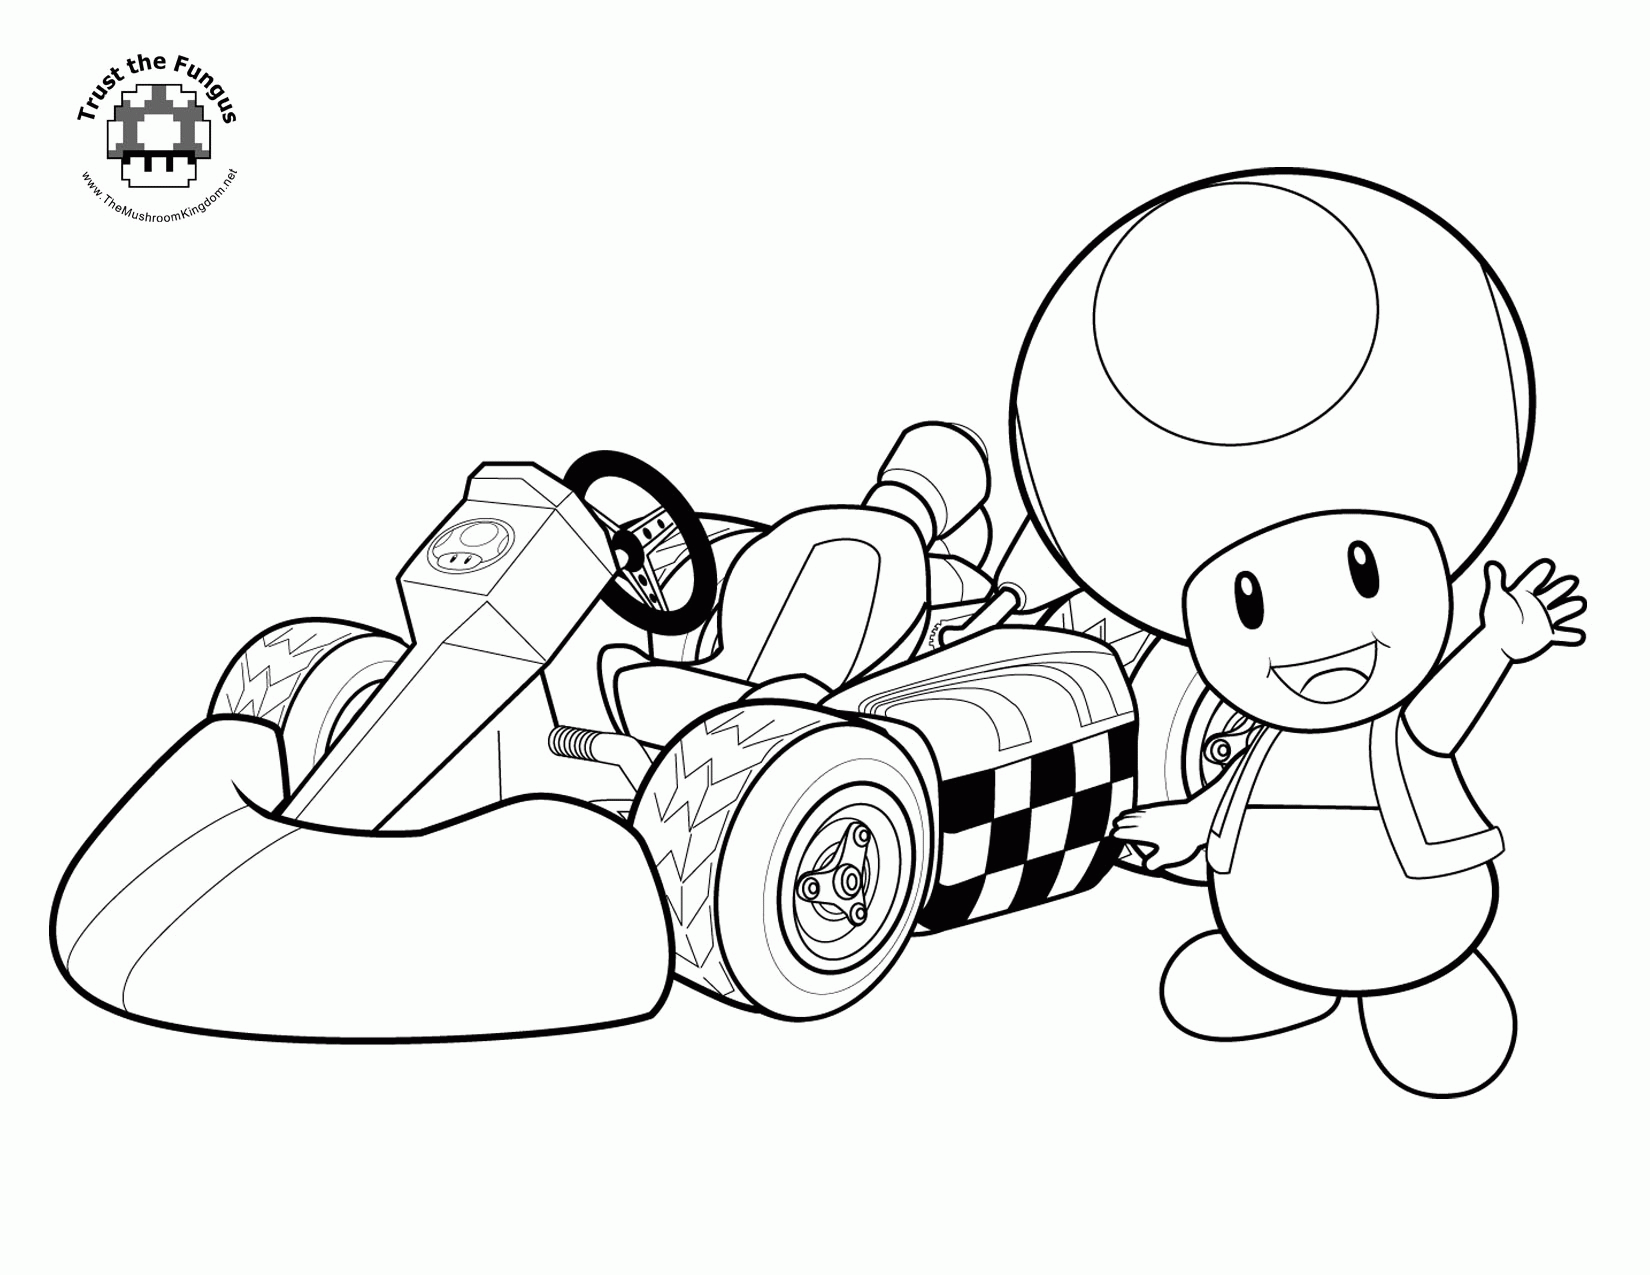 TMK Presents: Mario Kart Wii Coloring Pages!